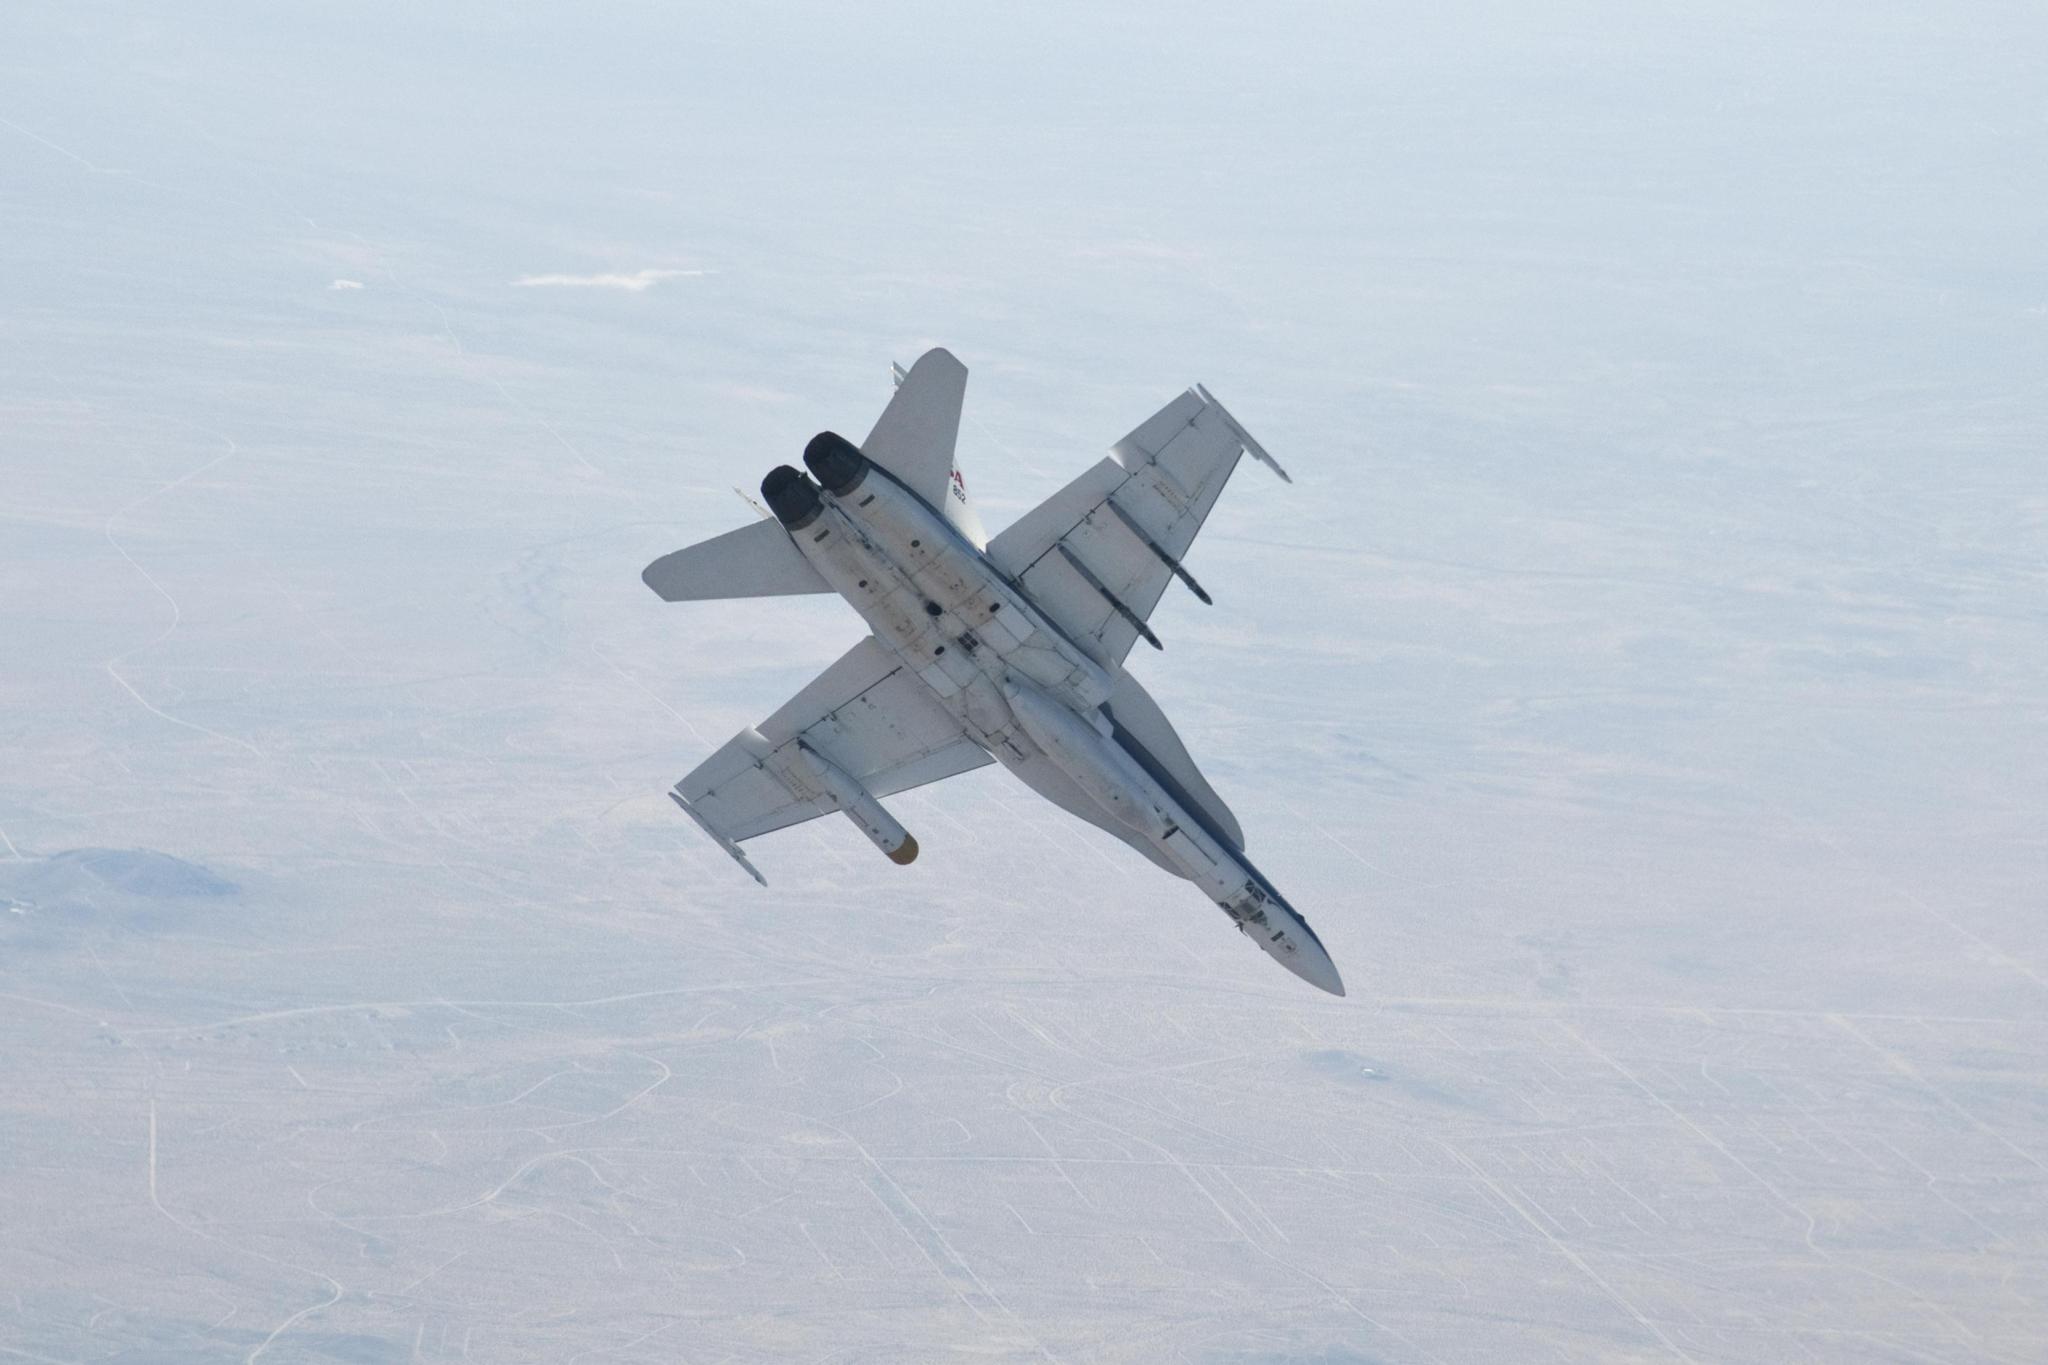 The underside of a fighter jet flying above Mojave Desert